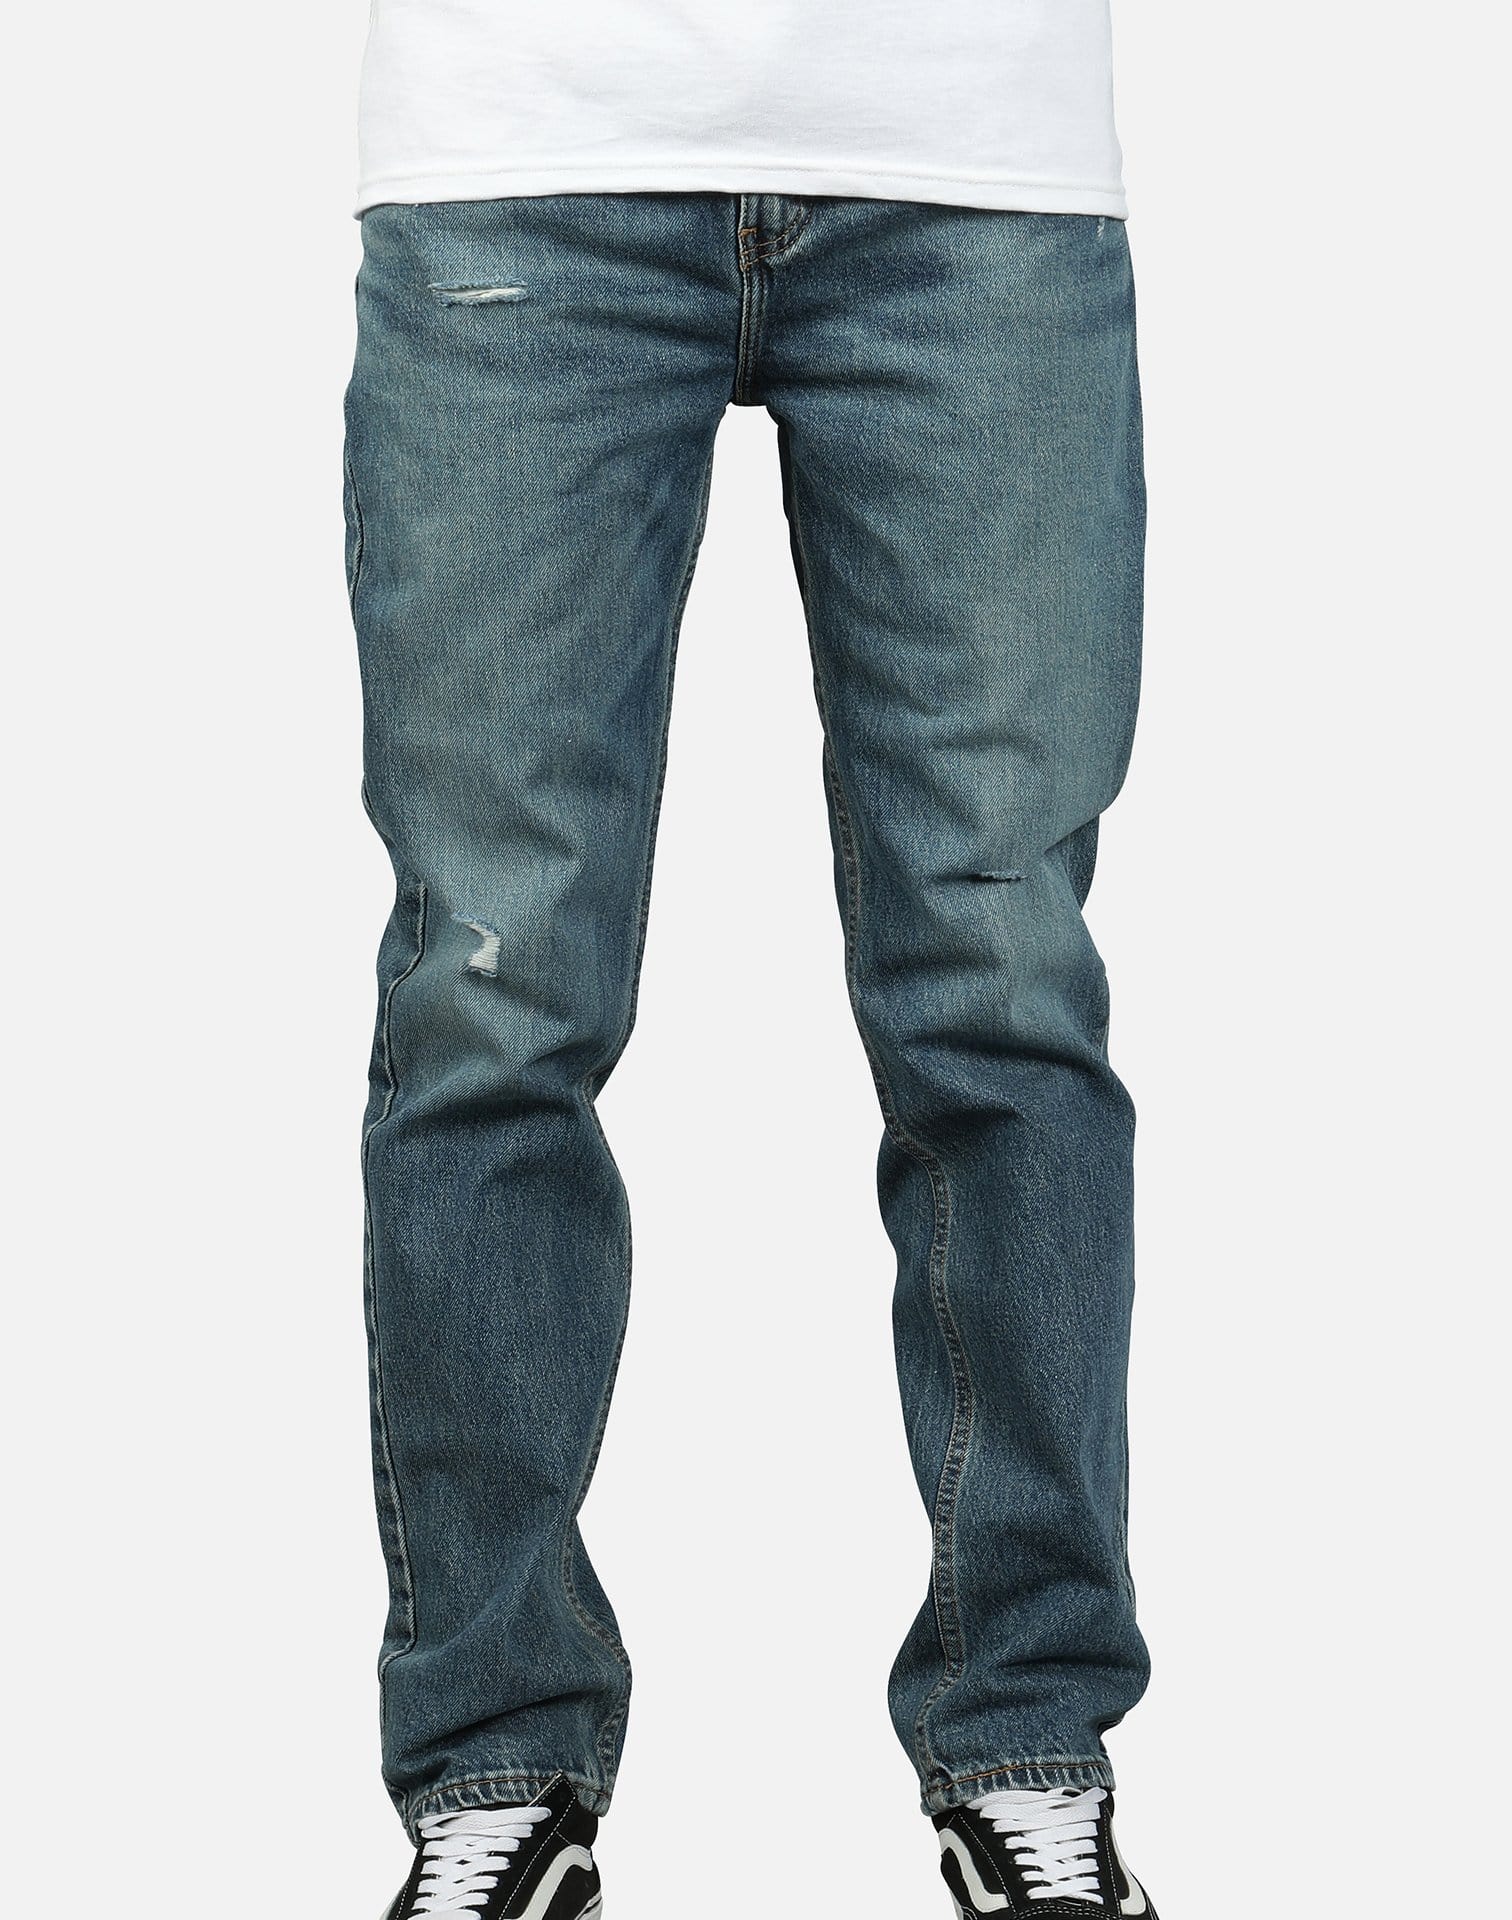 Levi's Men's 511 Slim Stretch Jeans